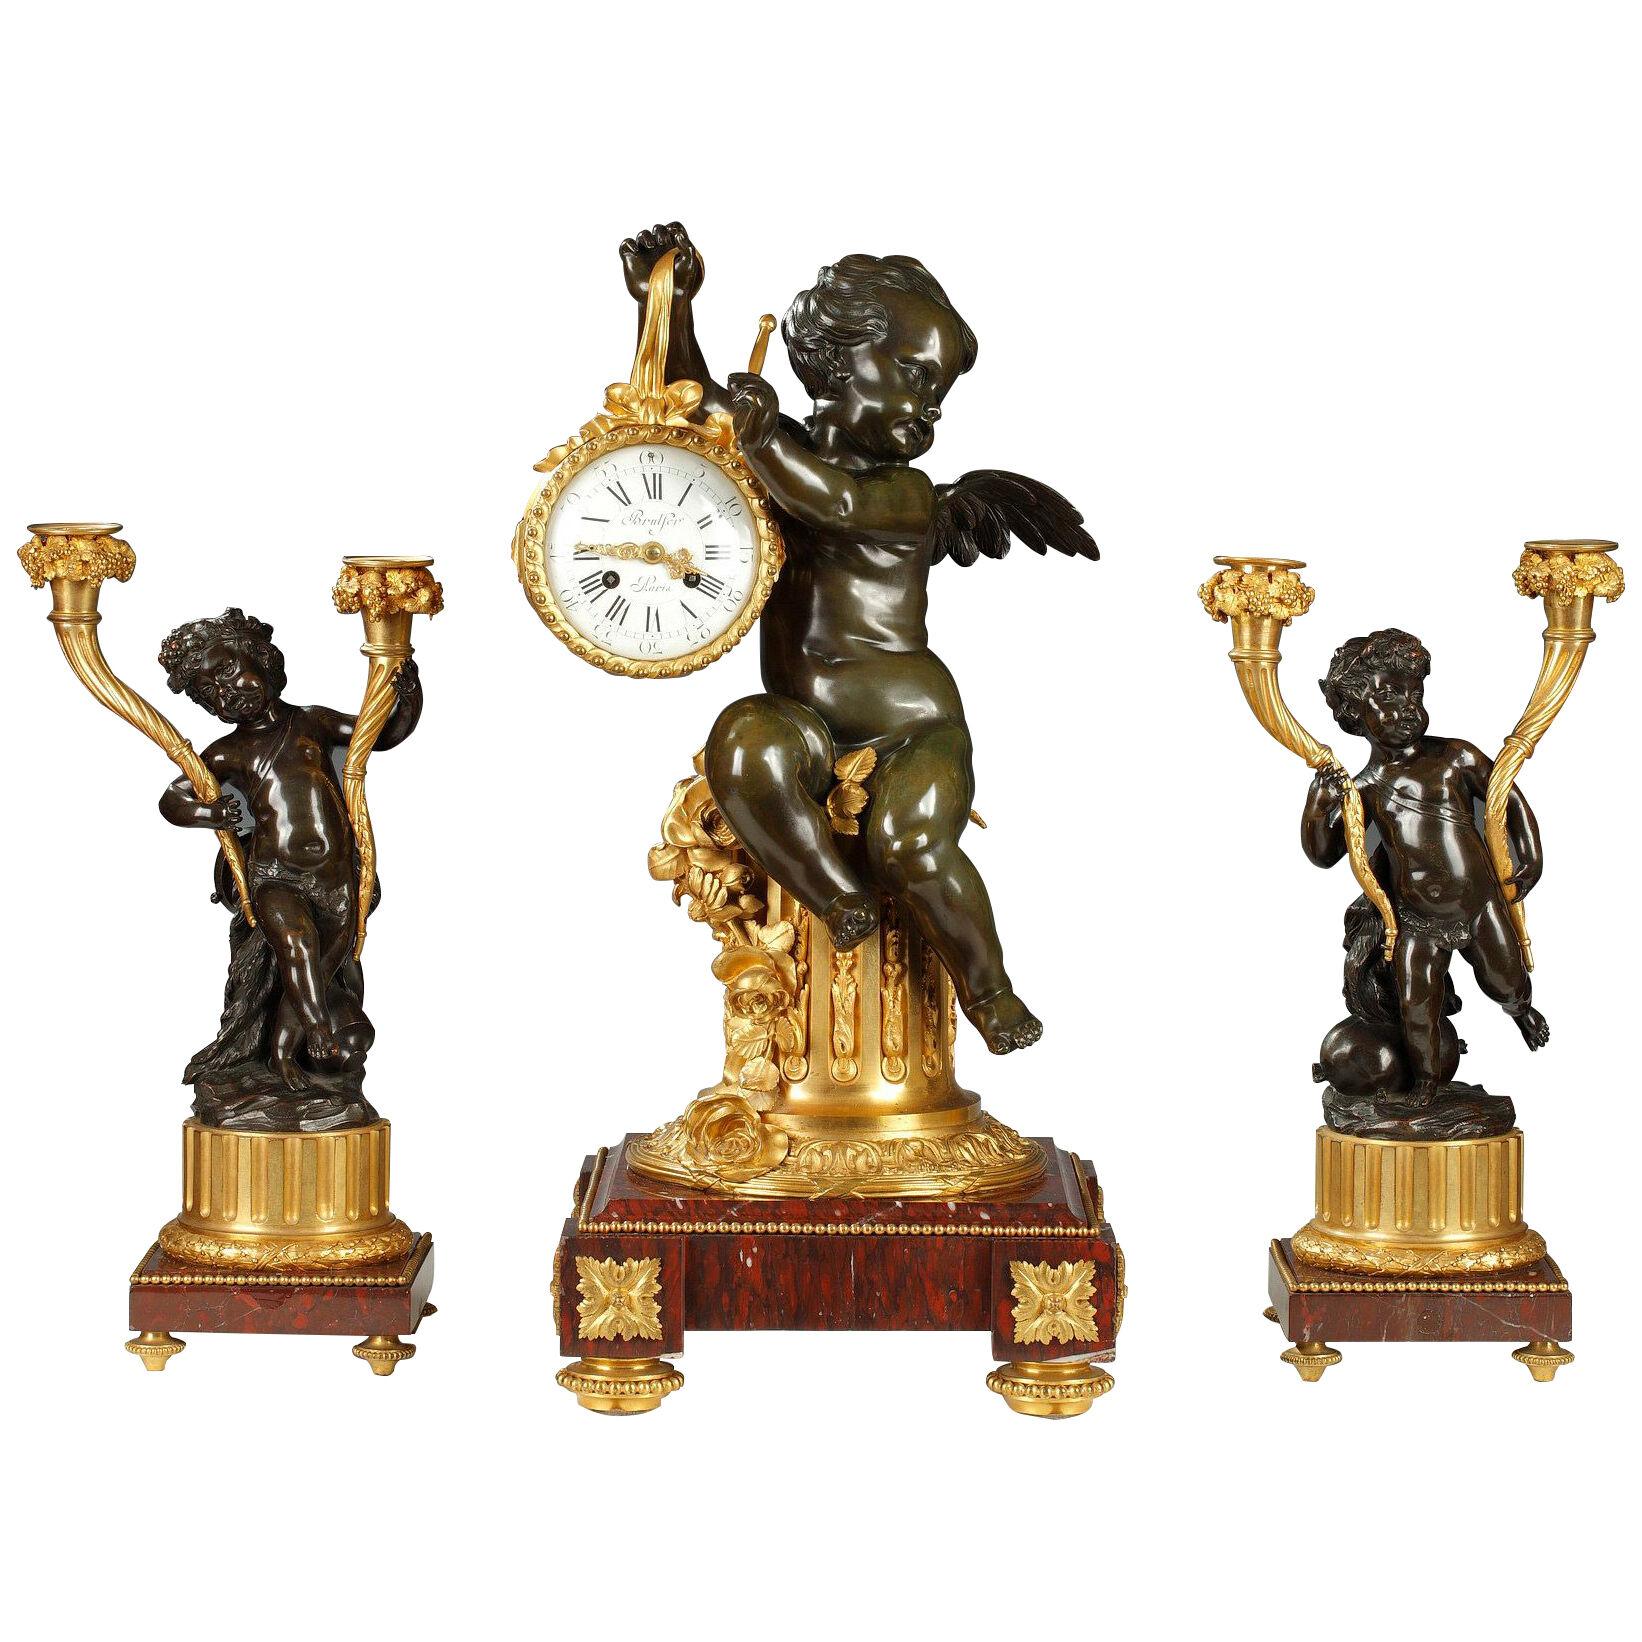 "The Drummer Child" Clock Set Signed Brulfer Paris, France, Circa 1880